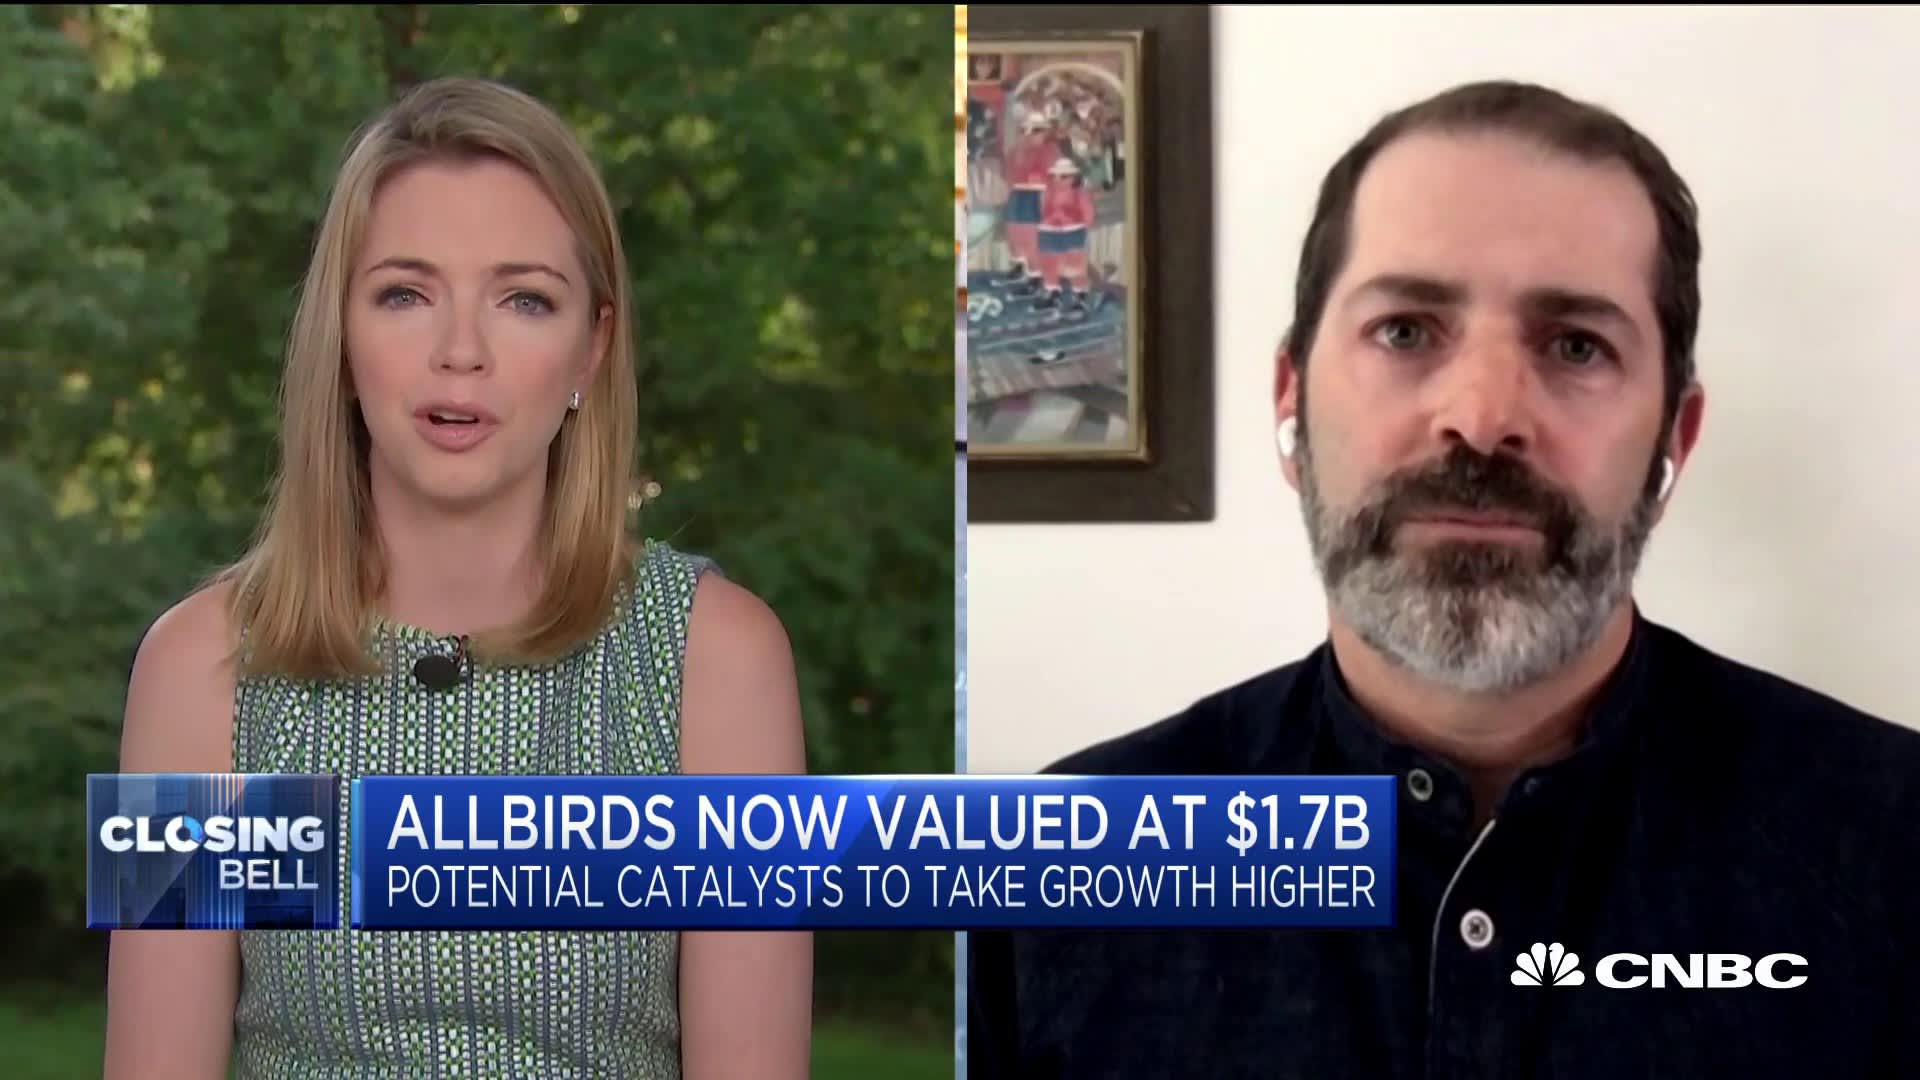 Allbirds now valued at $1.7B